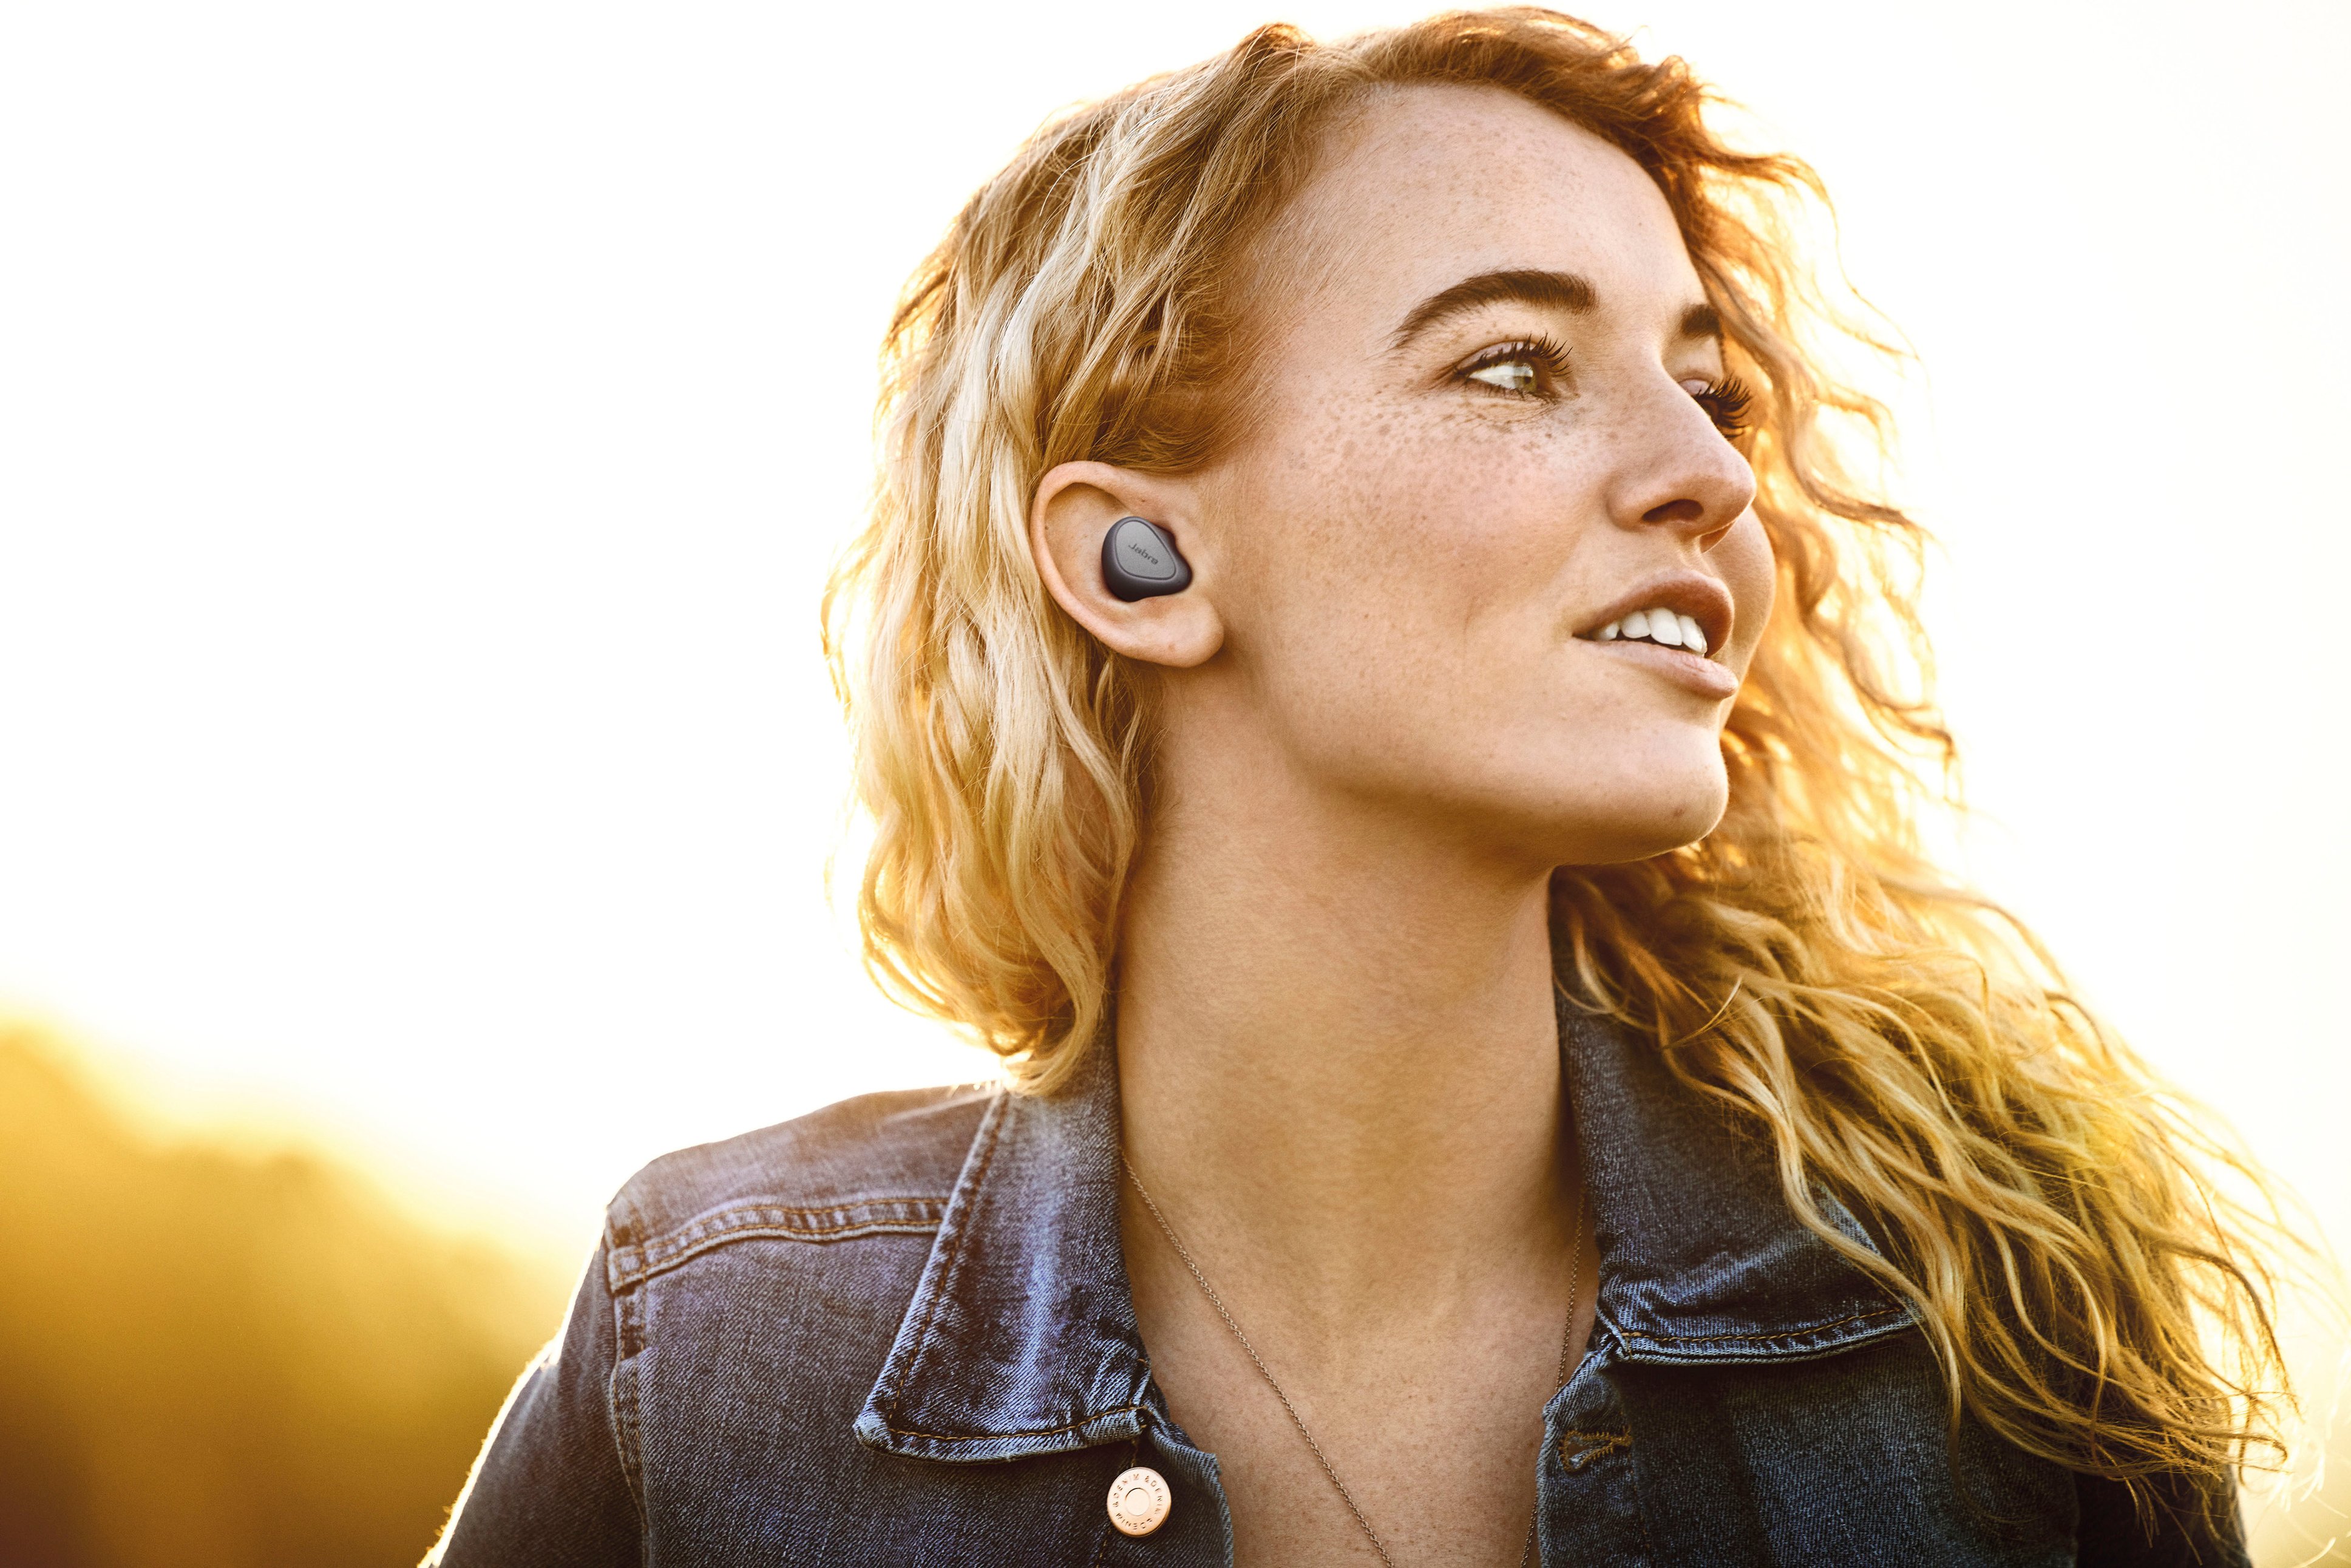 Jabra Elite Buy: True 100-91410001-02 3 Headphones In-Ear Best Wireless Navy